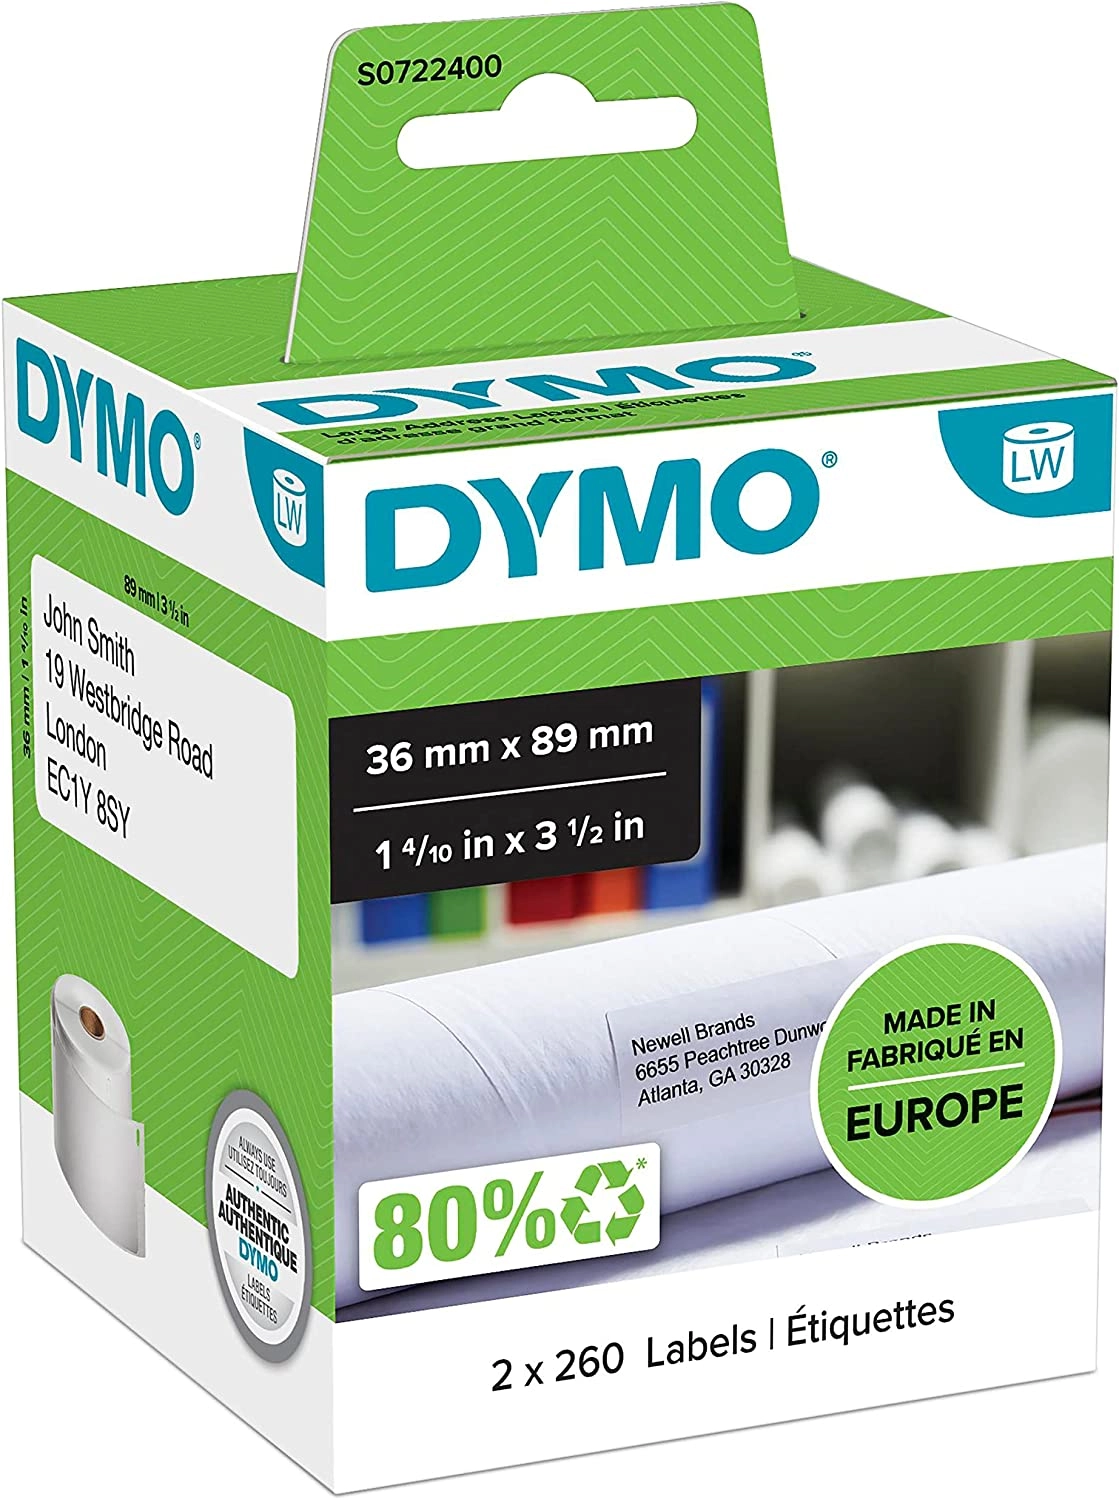 S0722400 Dymo LW 36mm x 89mm 130 Roll - 2 Pack (99012)